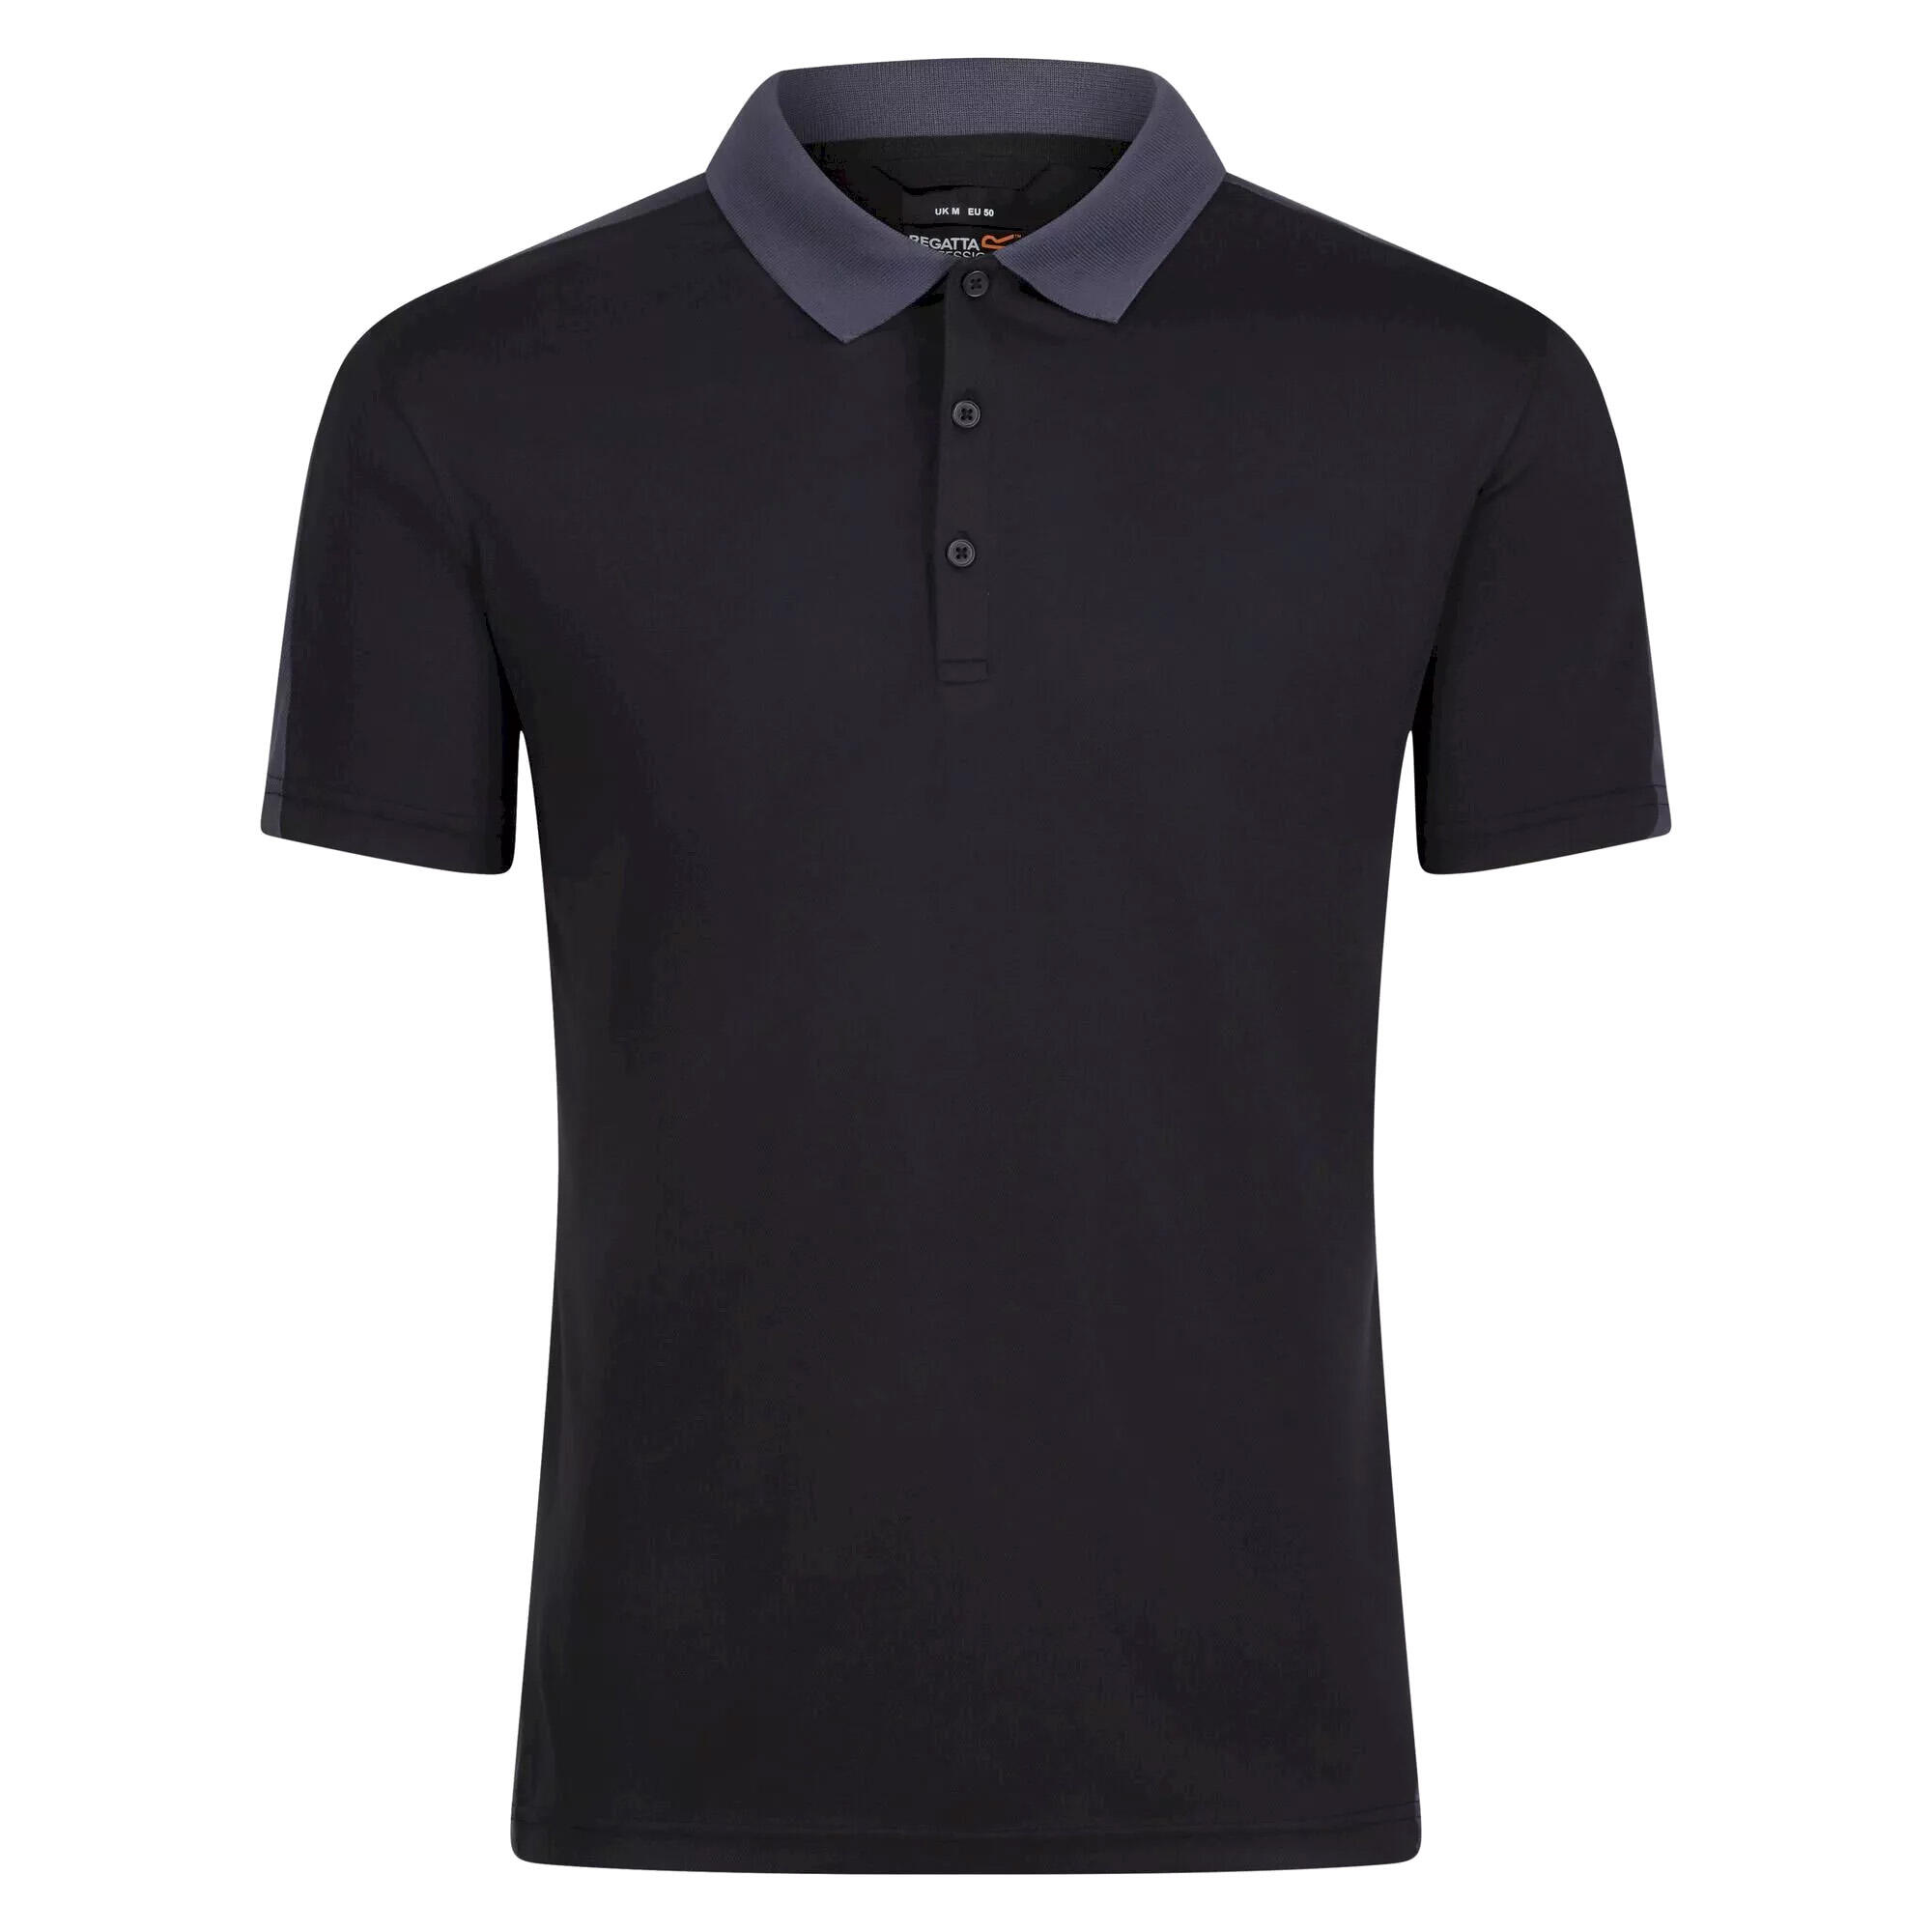 Contrast Coolweave Pique Polo Shirt (Black/Seal Grey) 1/5